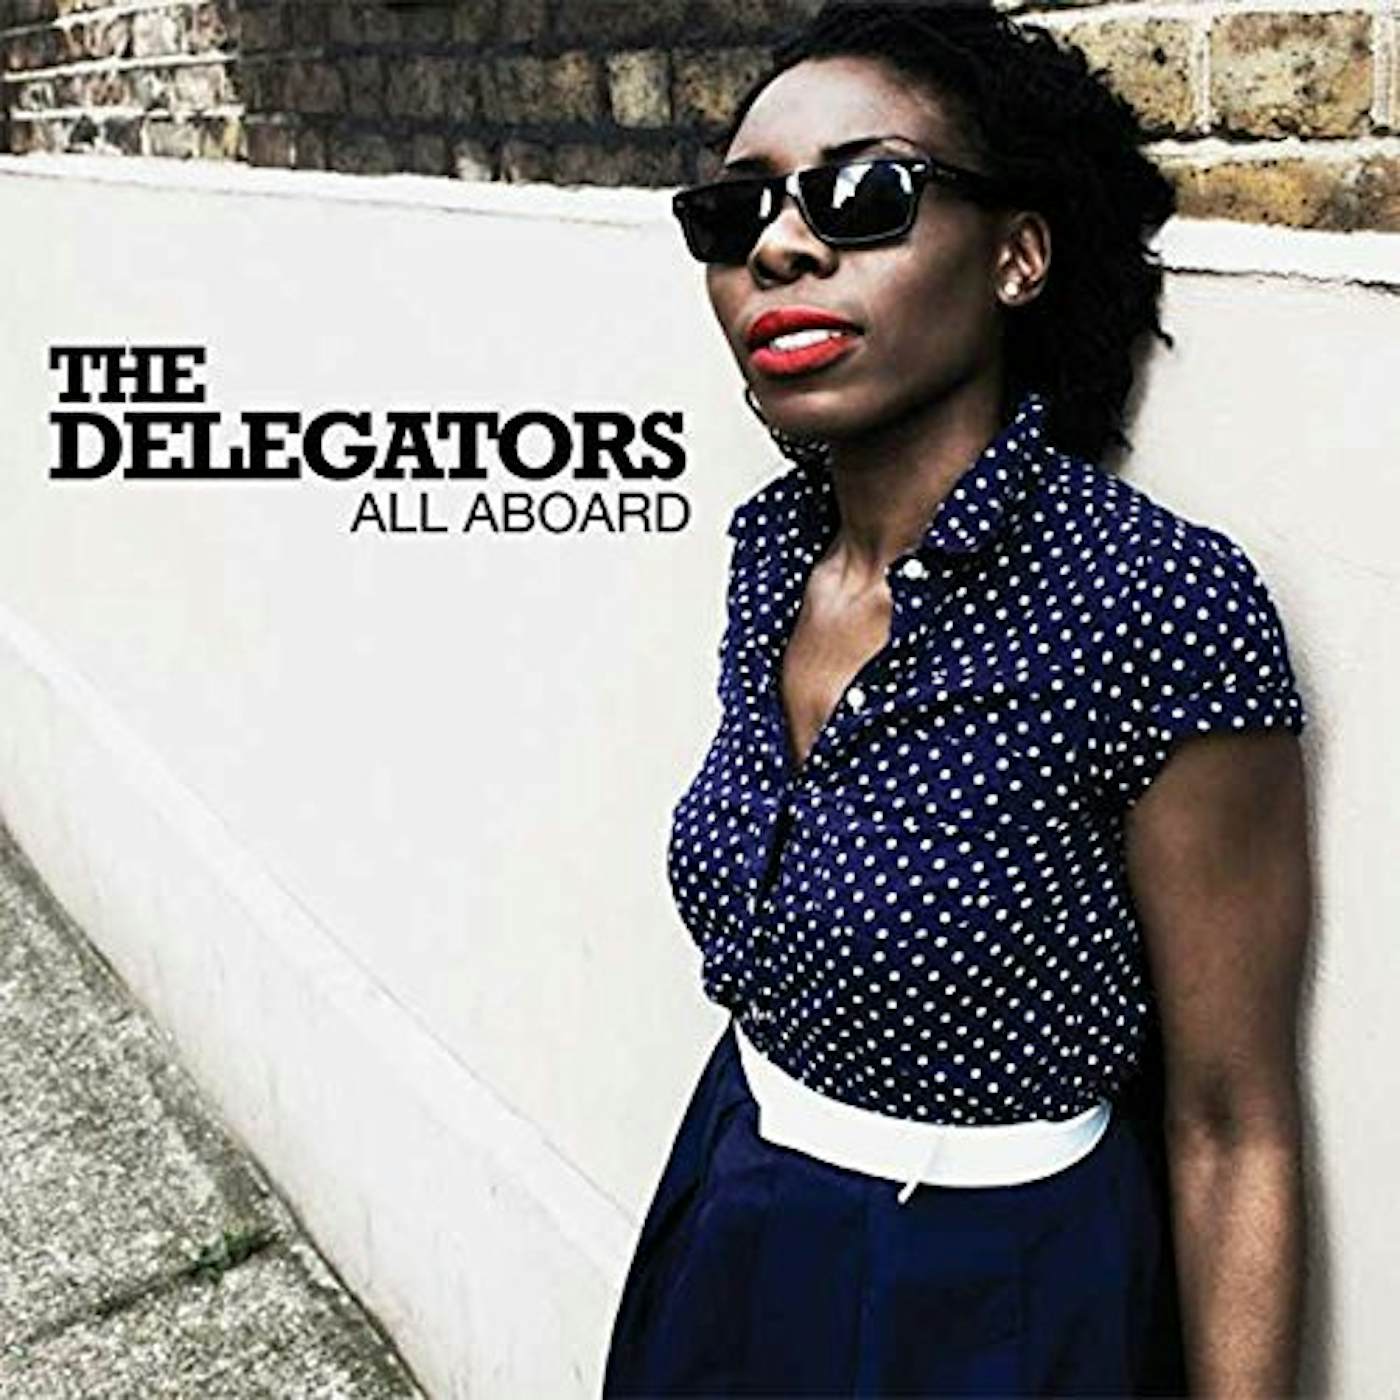 The Delegators All Aboard Vinyl Record